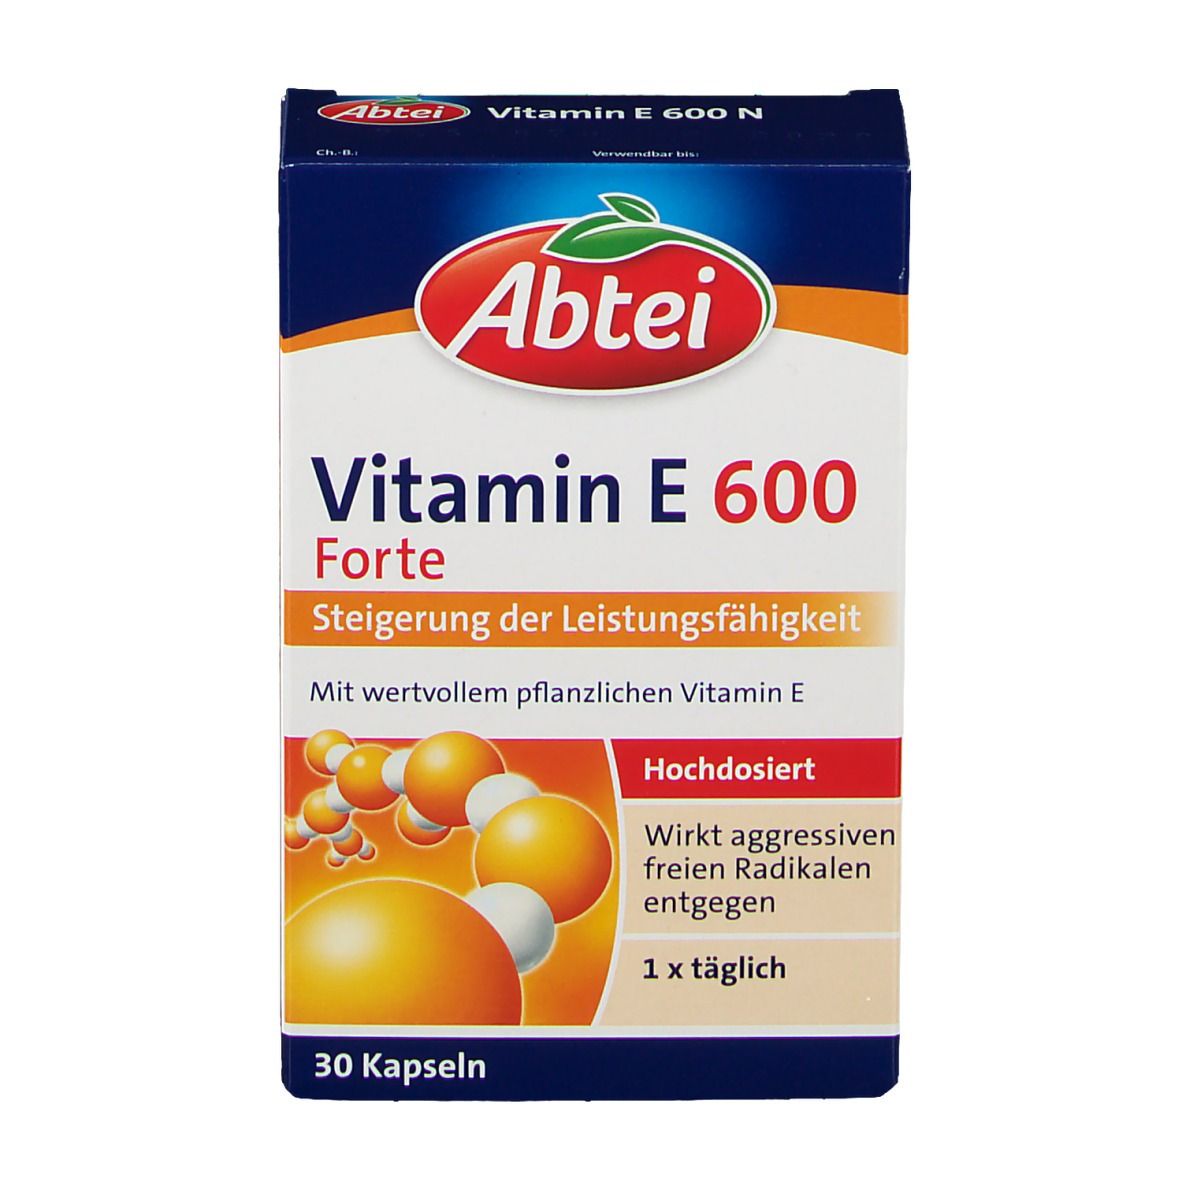 Abtei Vitamin E 600